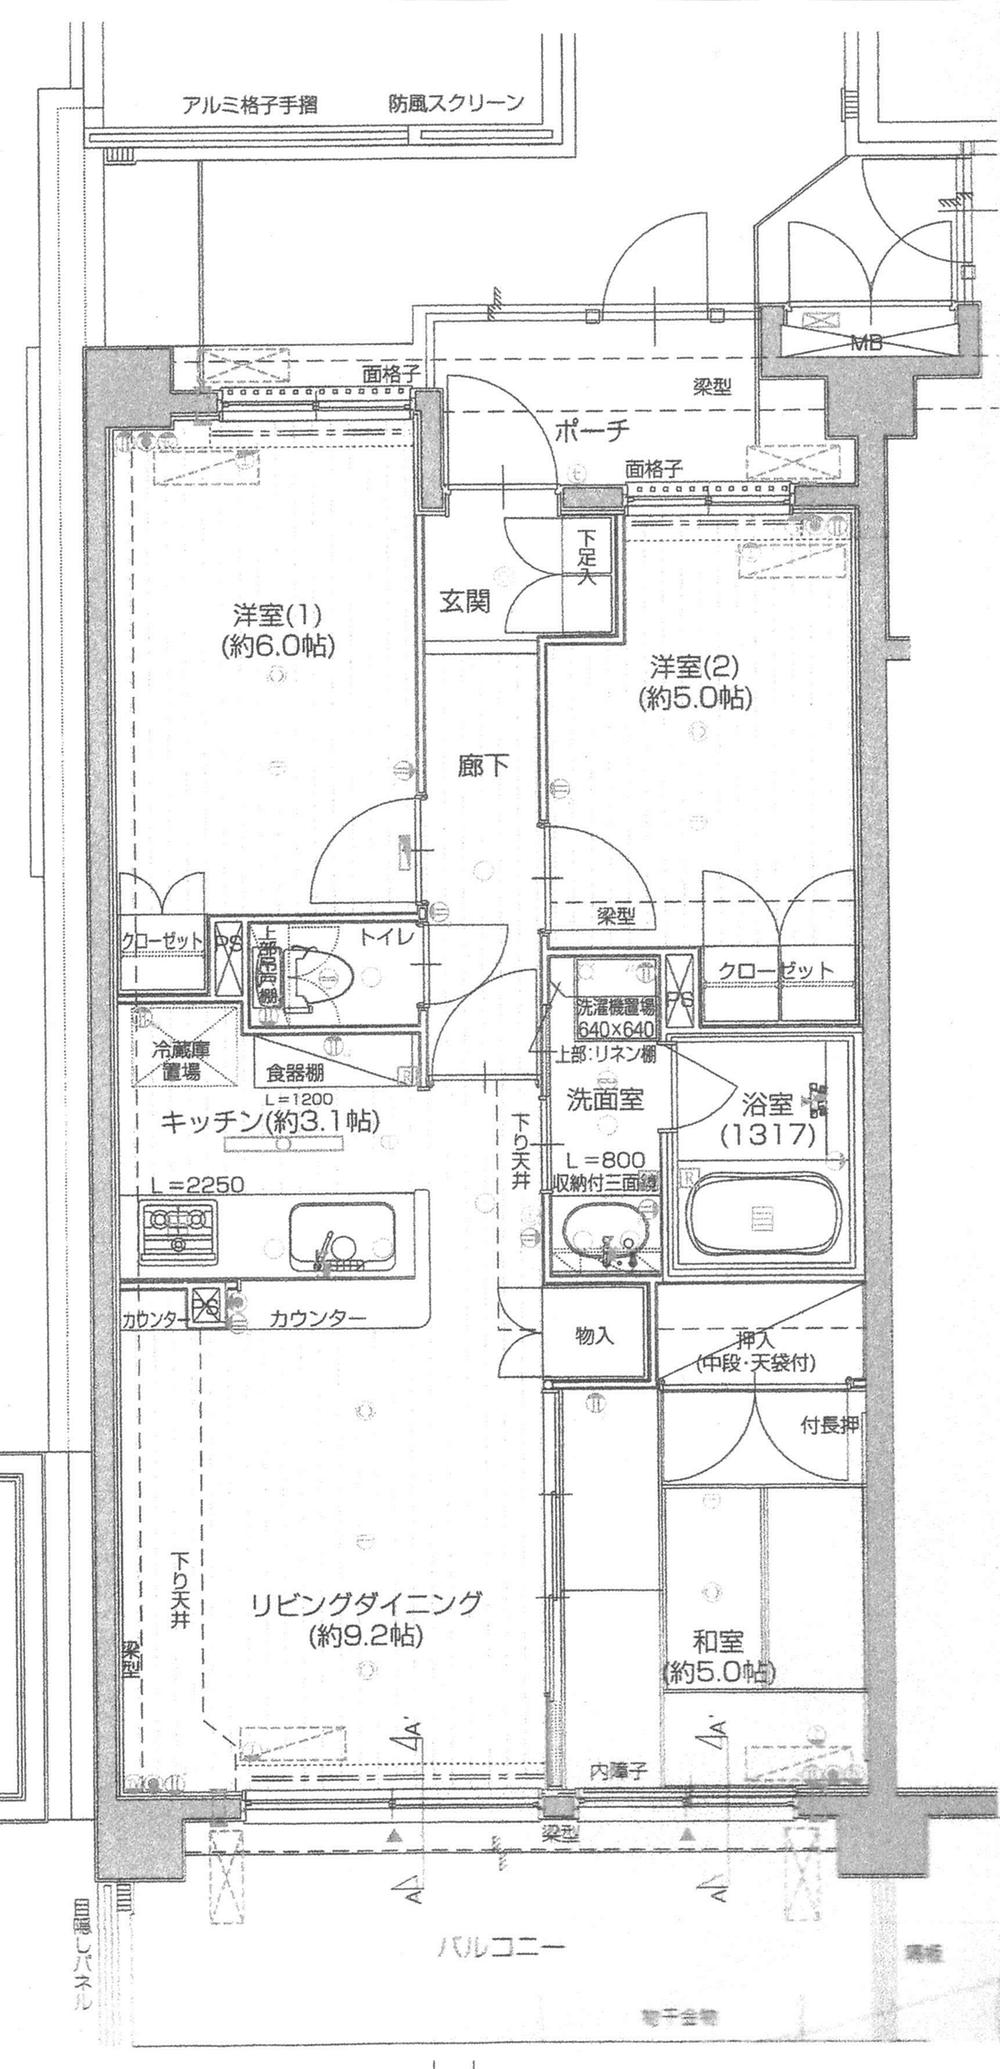 Floor plan. 3LDK, Price 15.6 million yen, Footprint 61 sq m , Balcony area 11.8 sq m 3LDK